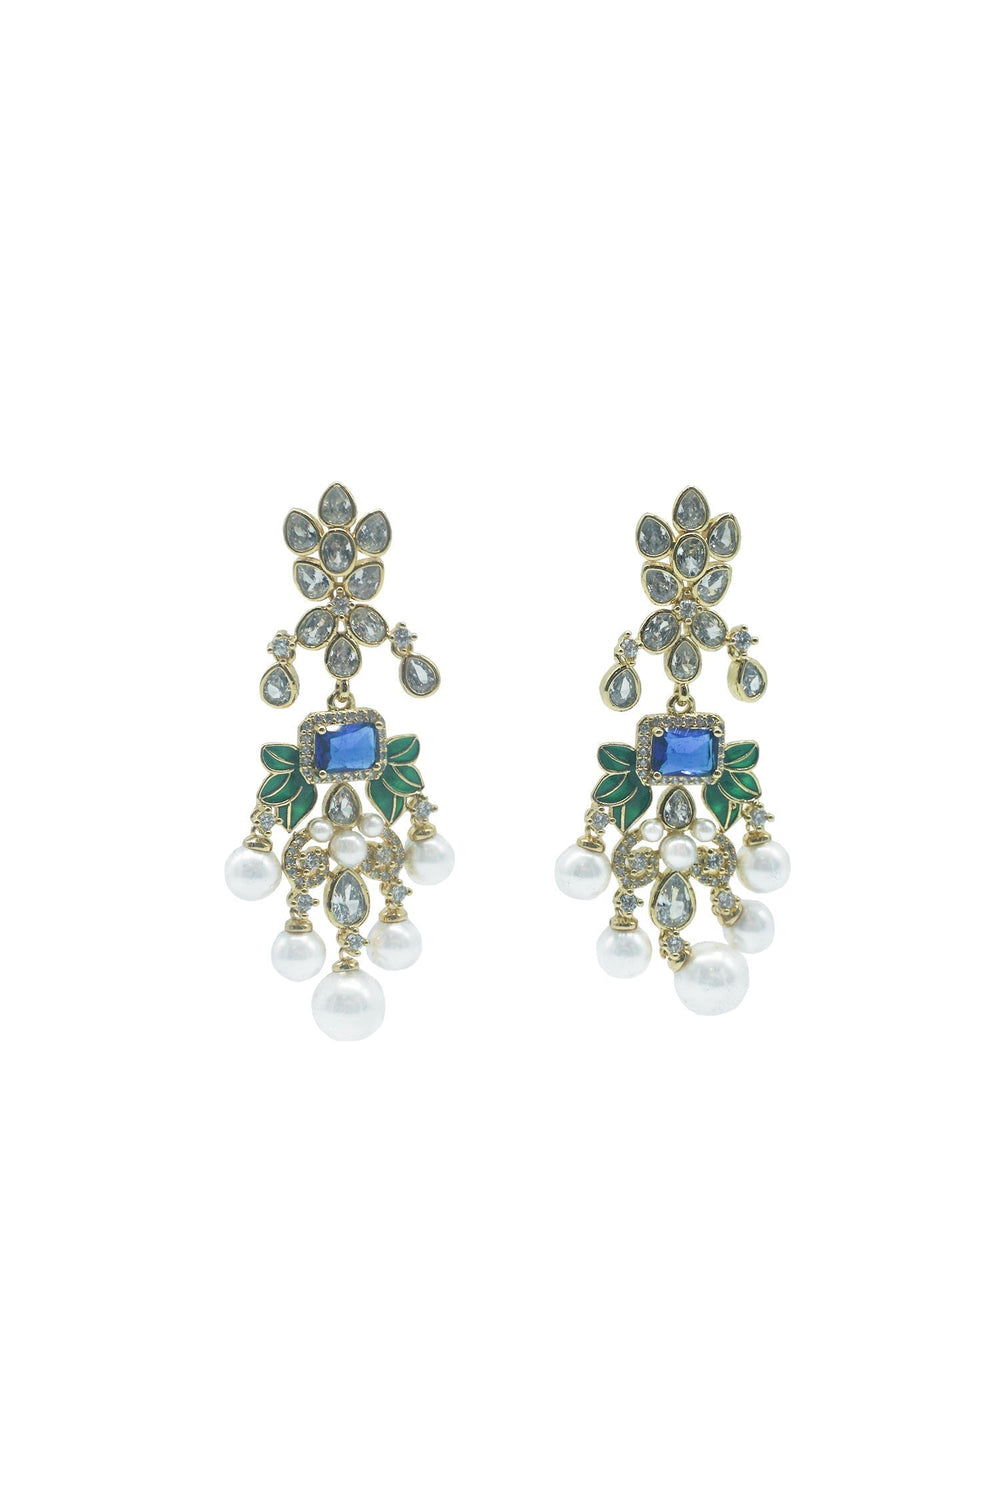 Jolie Embellished Earrings with Pearls